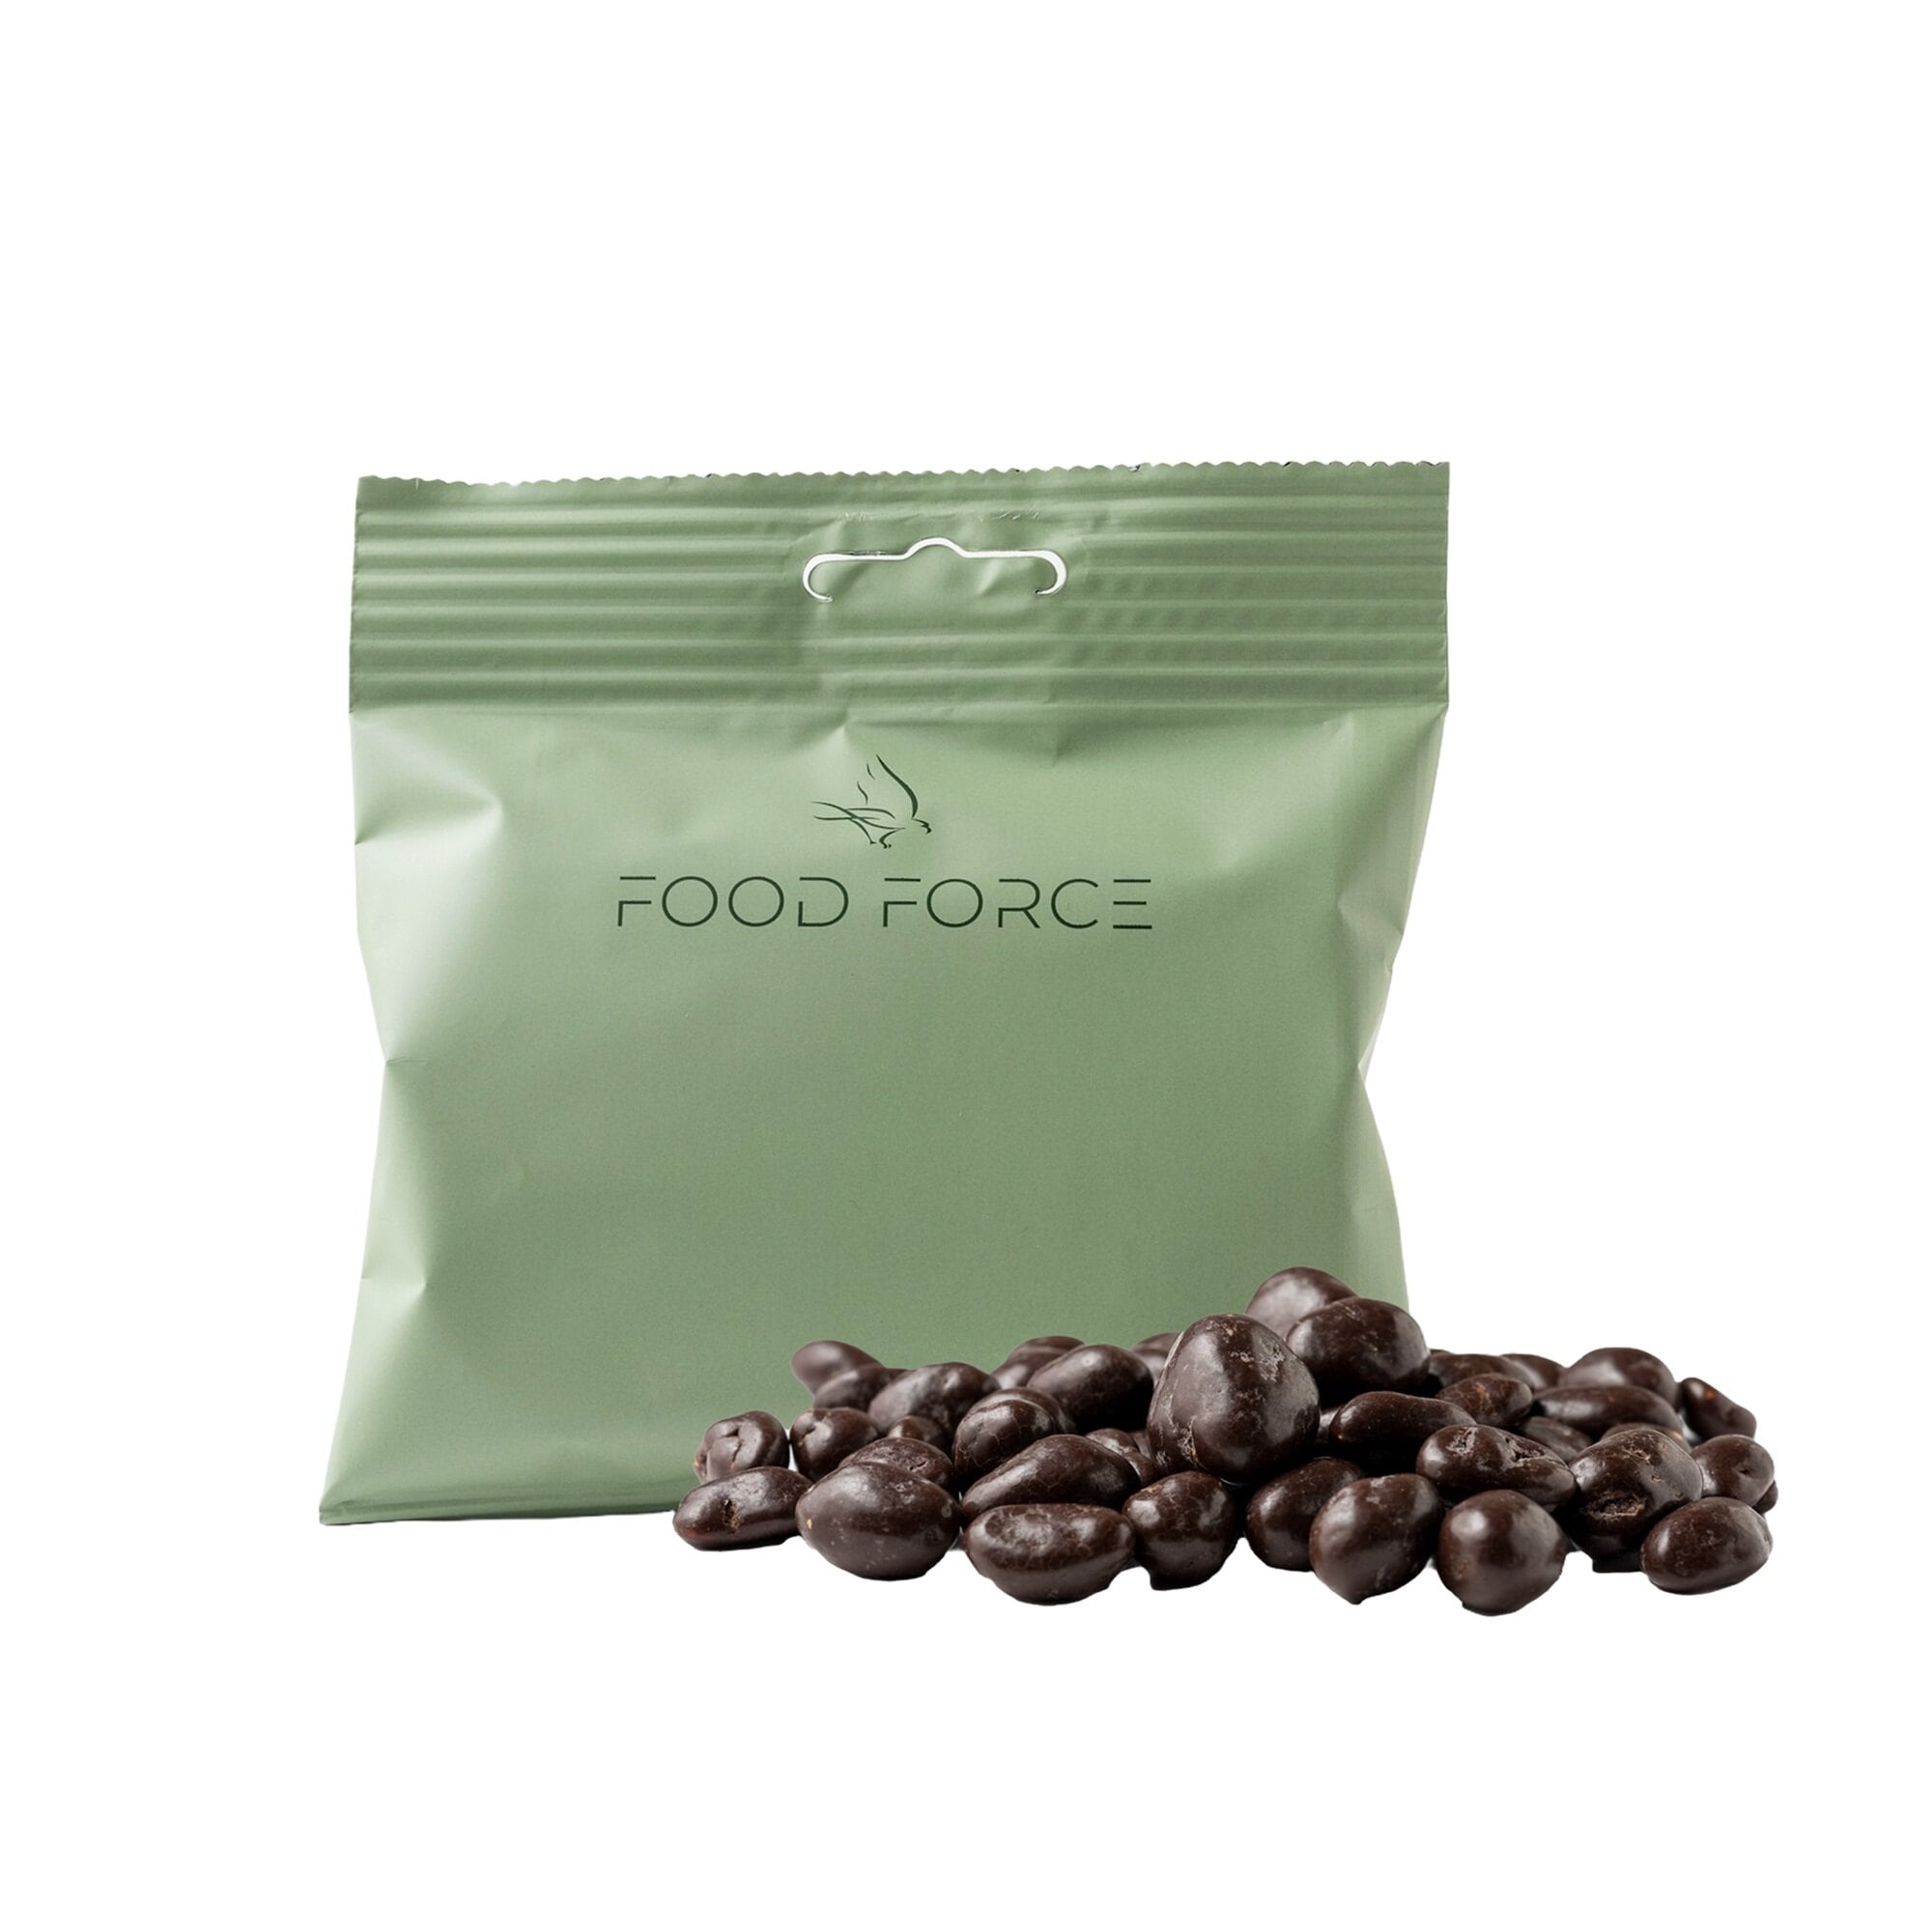 Food Force Peanuts in dark chocolate